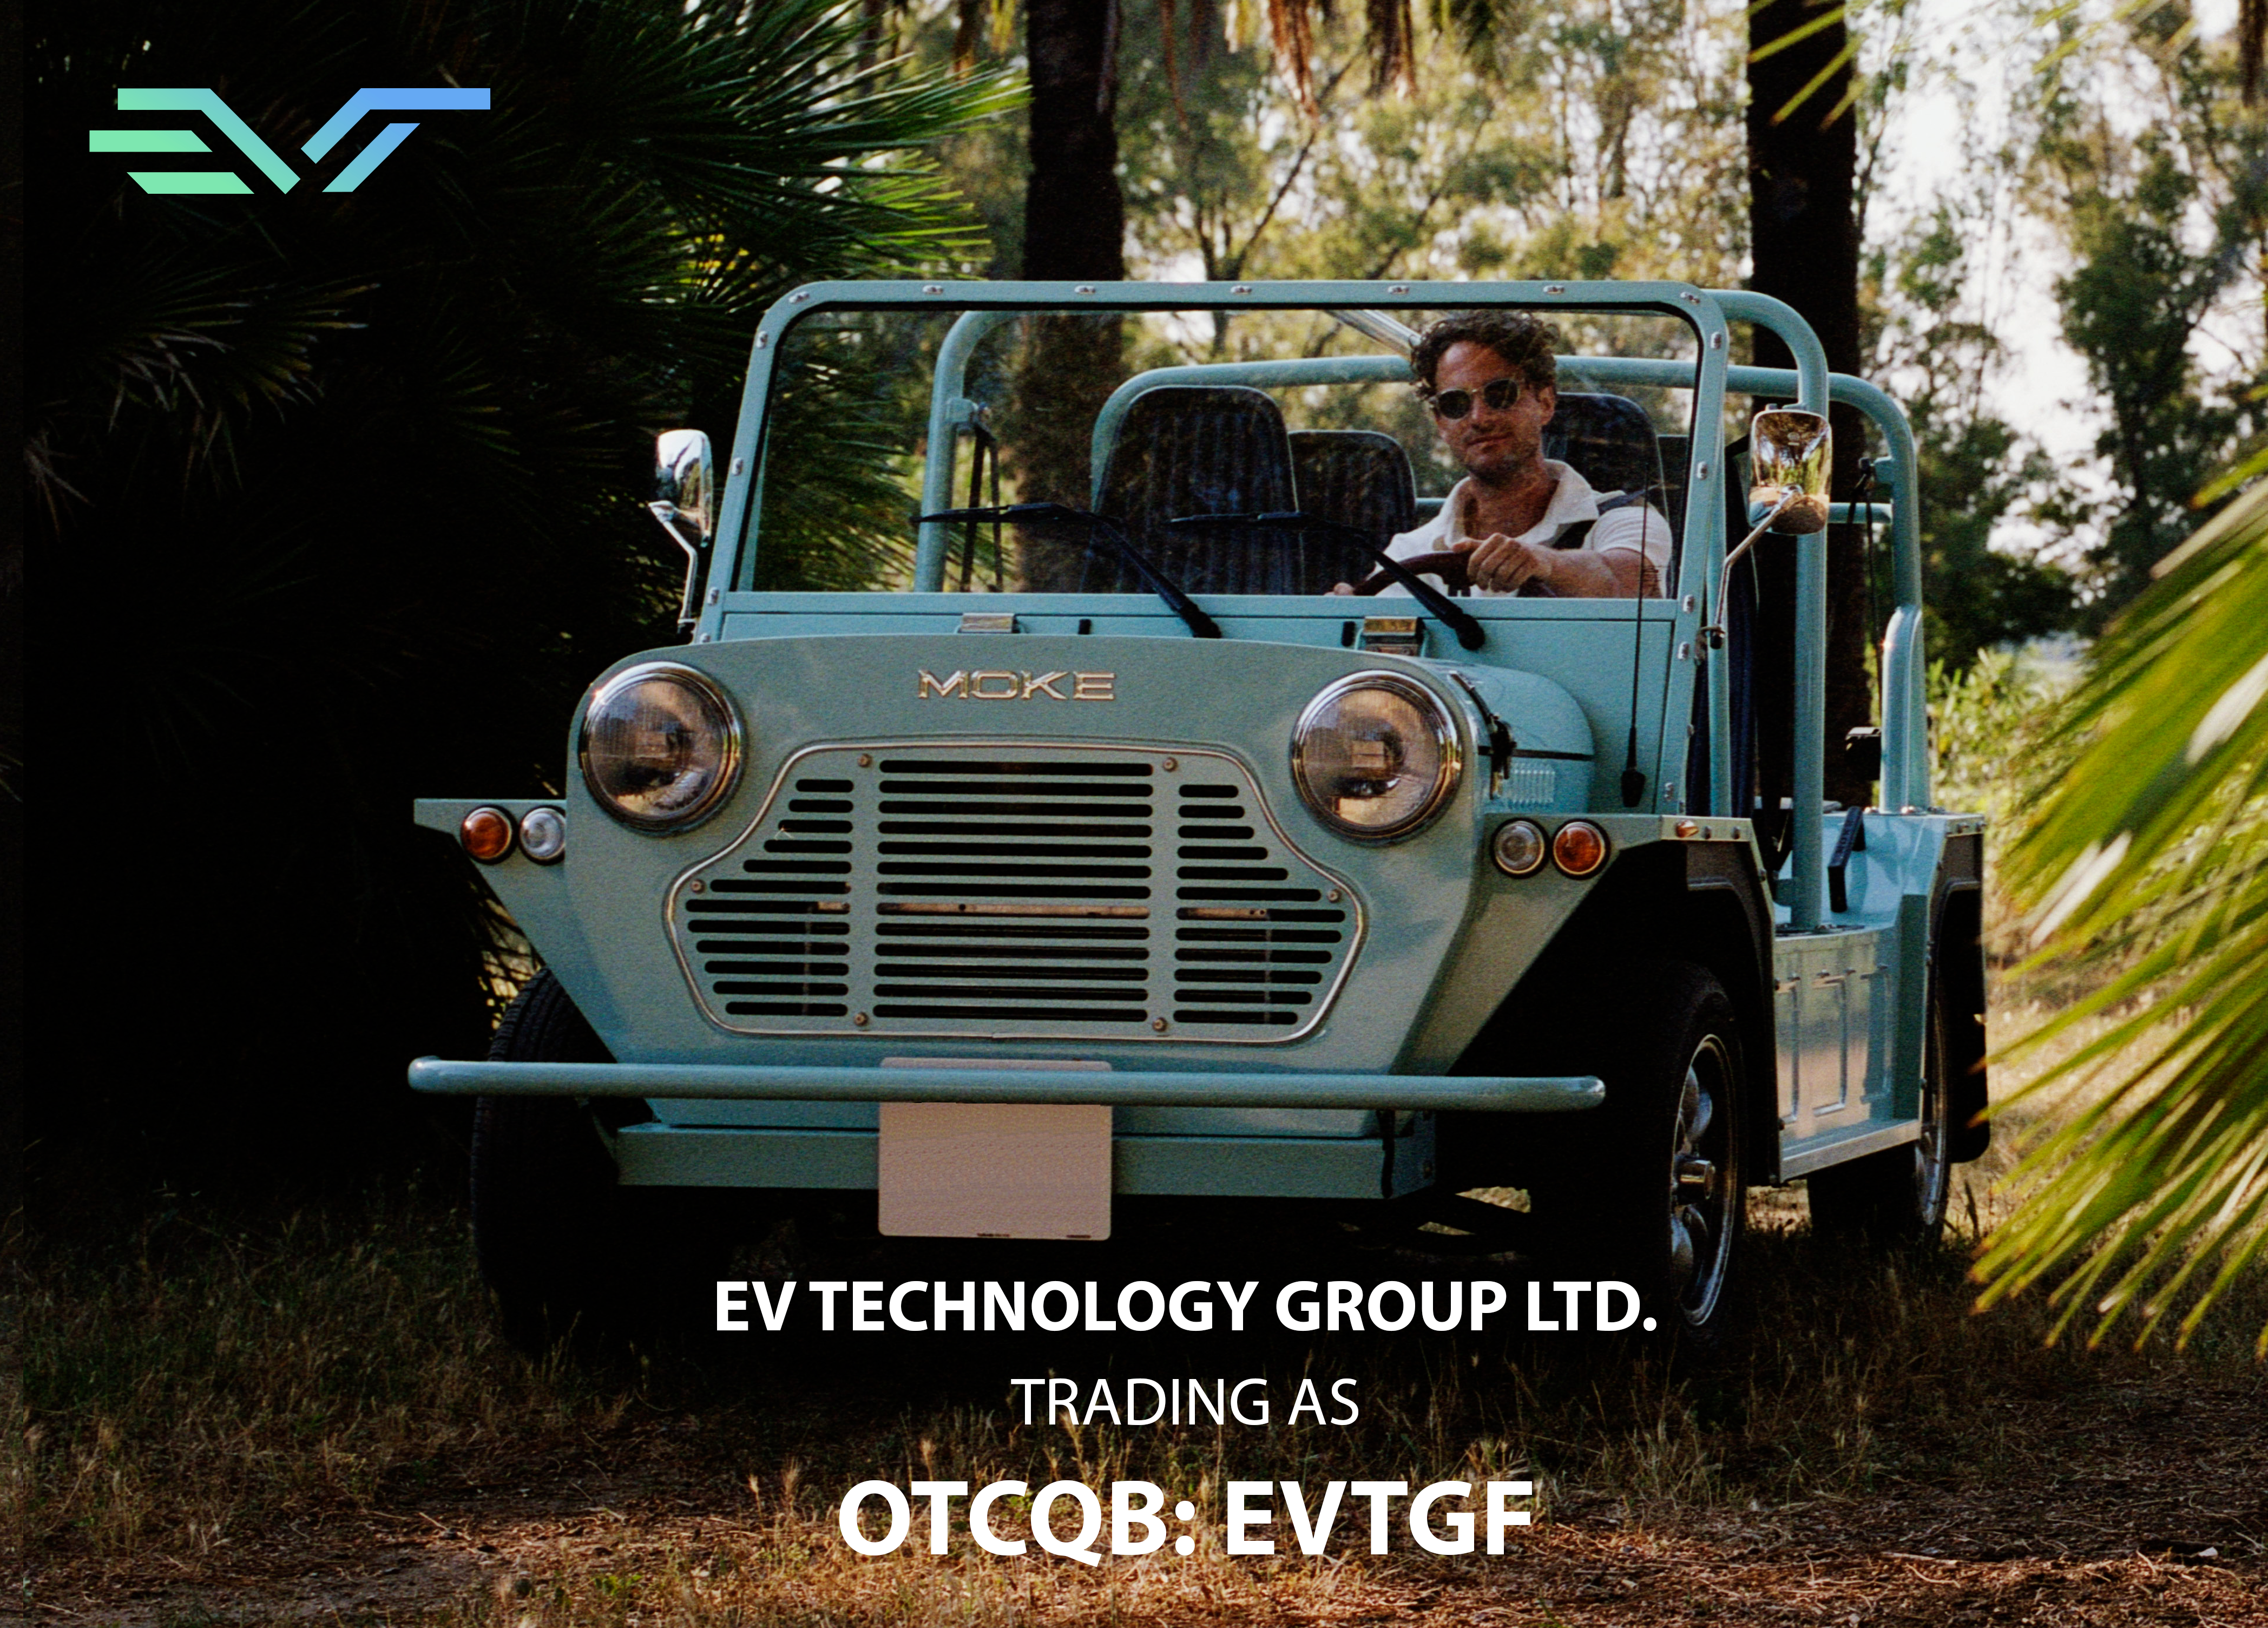 EV TECHNOLOGY GROUP OTCQB: EVTGF